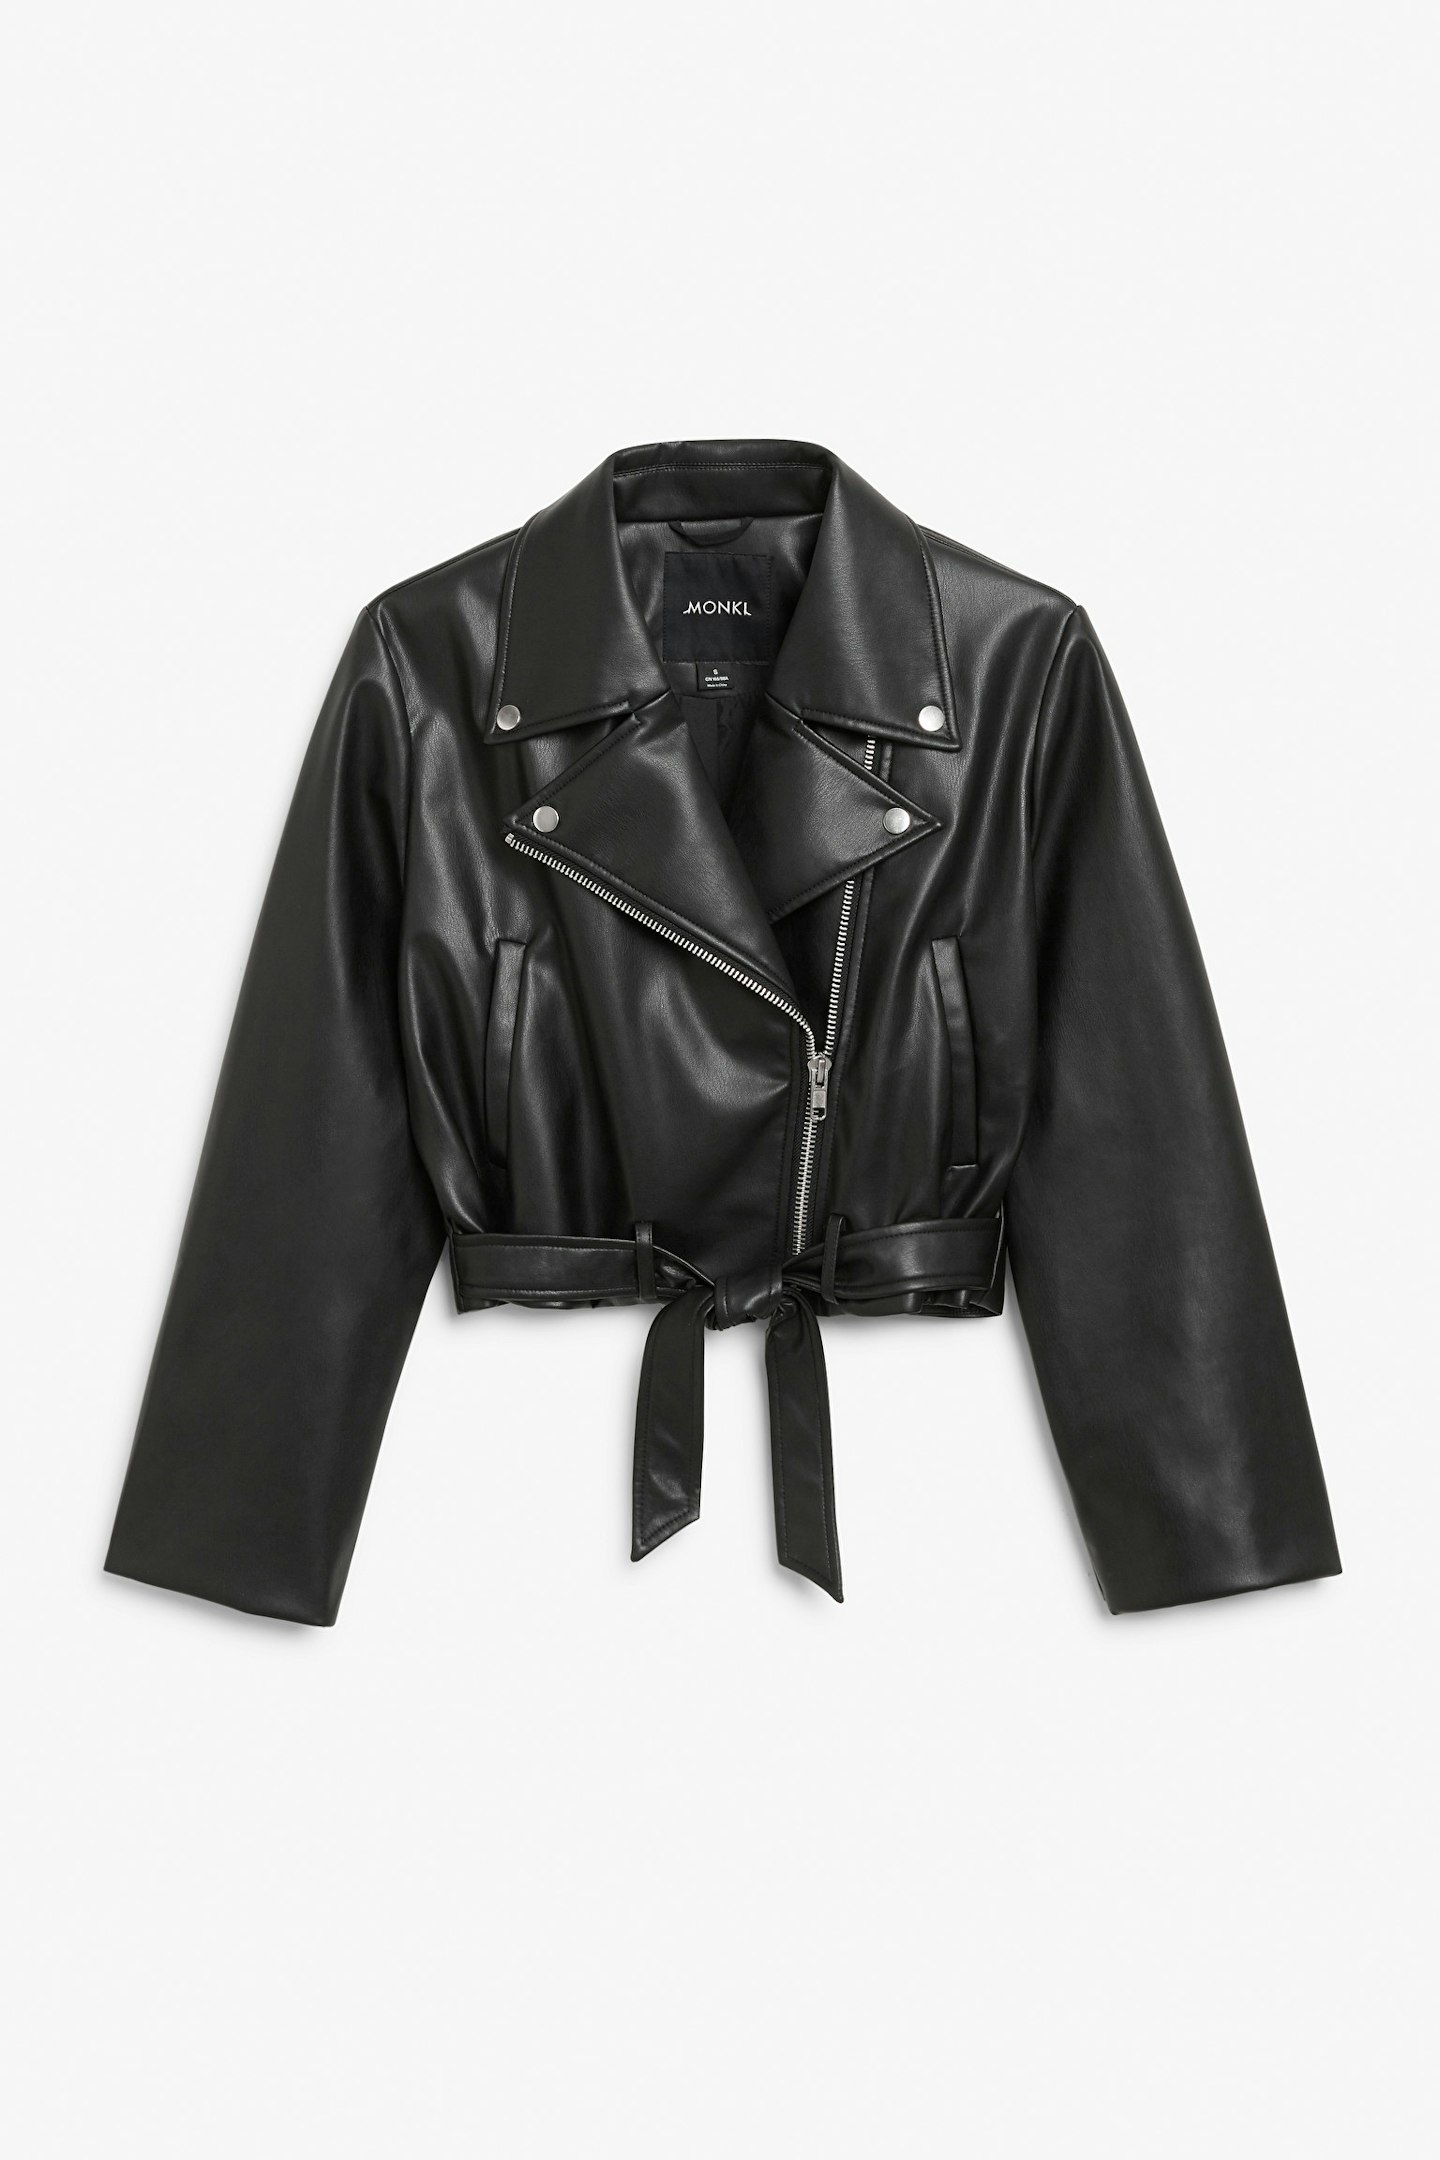 Monki Black Cropped Faux Leather Jacket